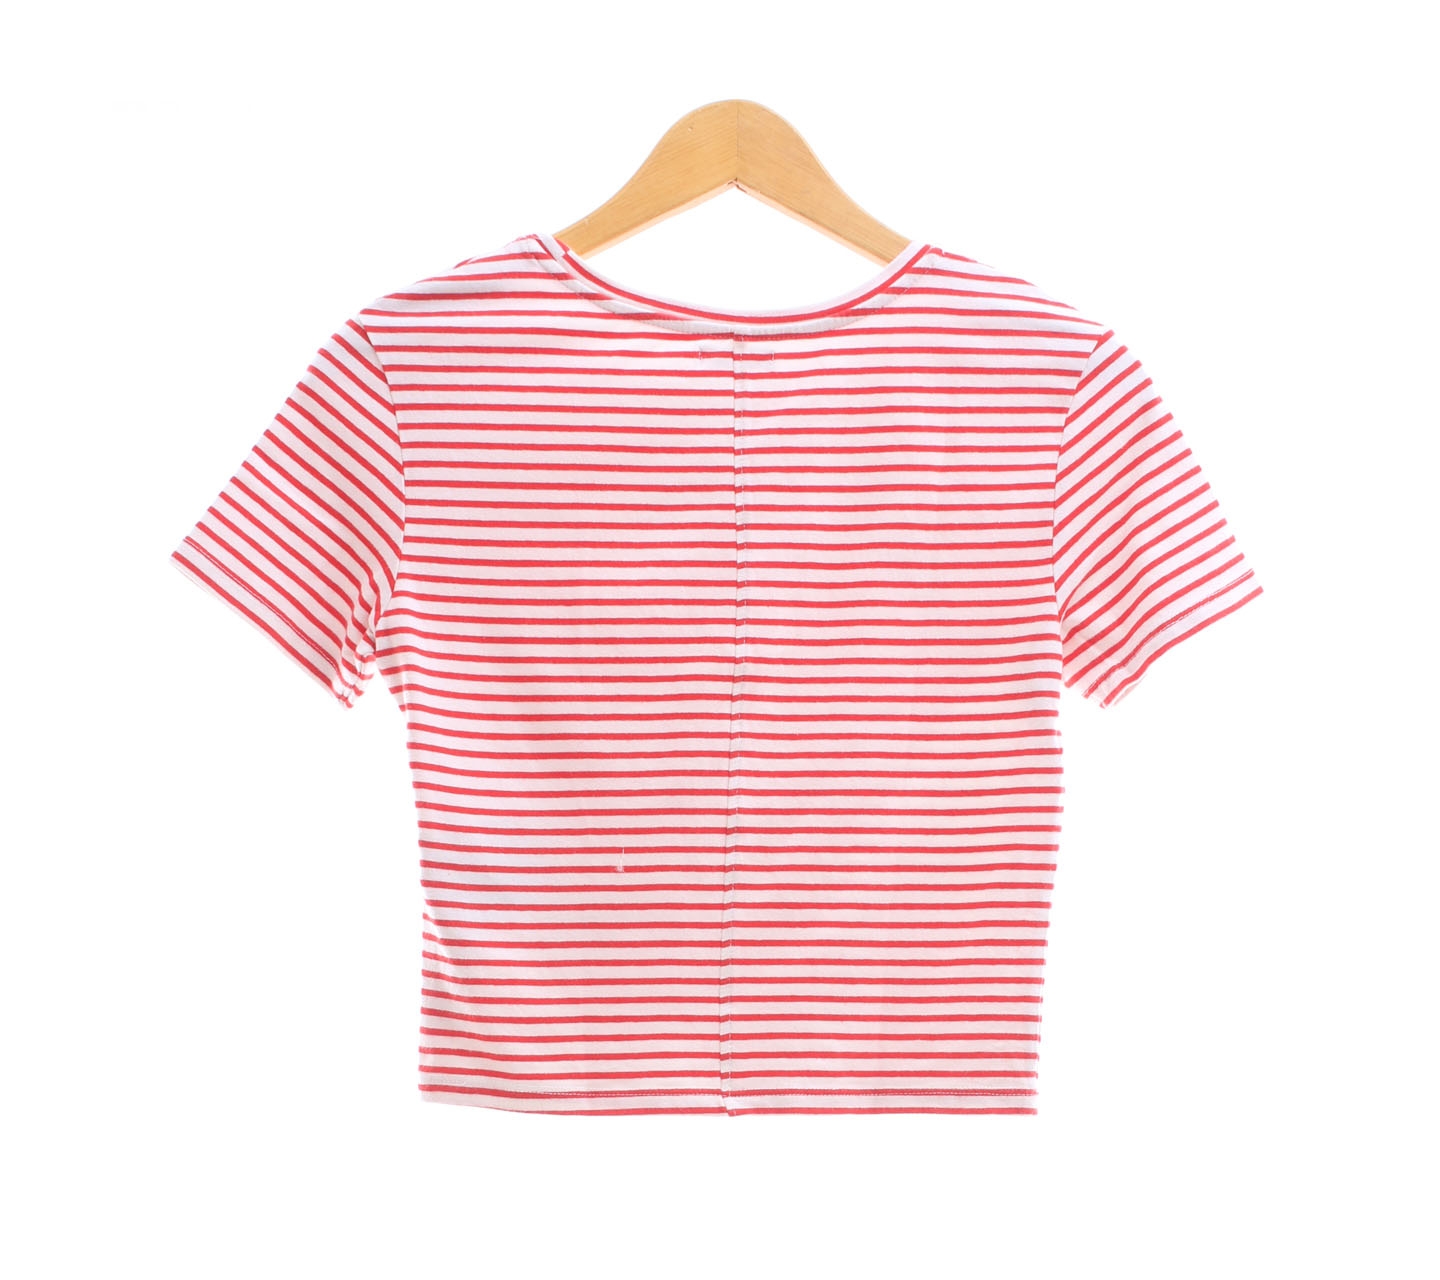 Zara Red & White Striped T-Shirt